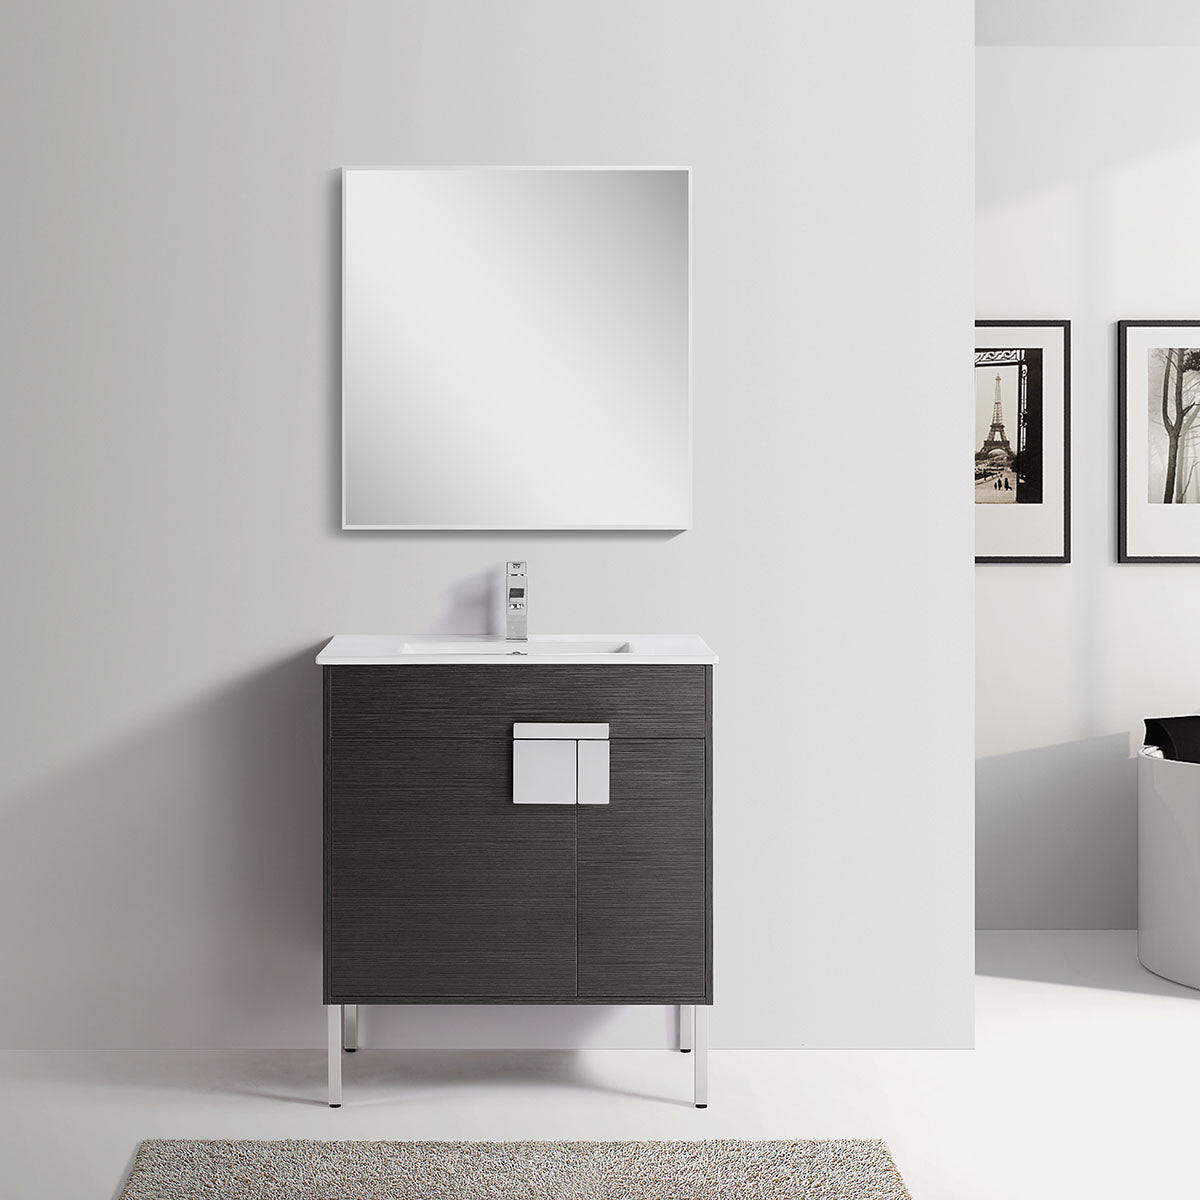 30" V9003 Series Vanity with Ceramic Sink (Charcoal Grey)